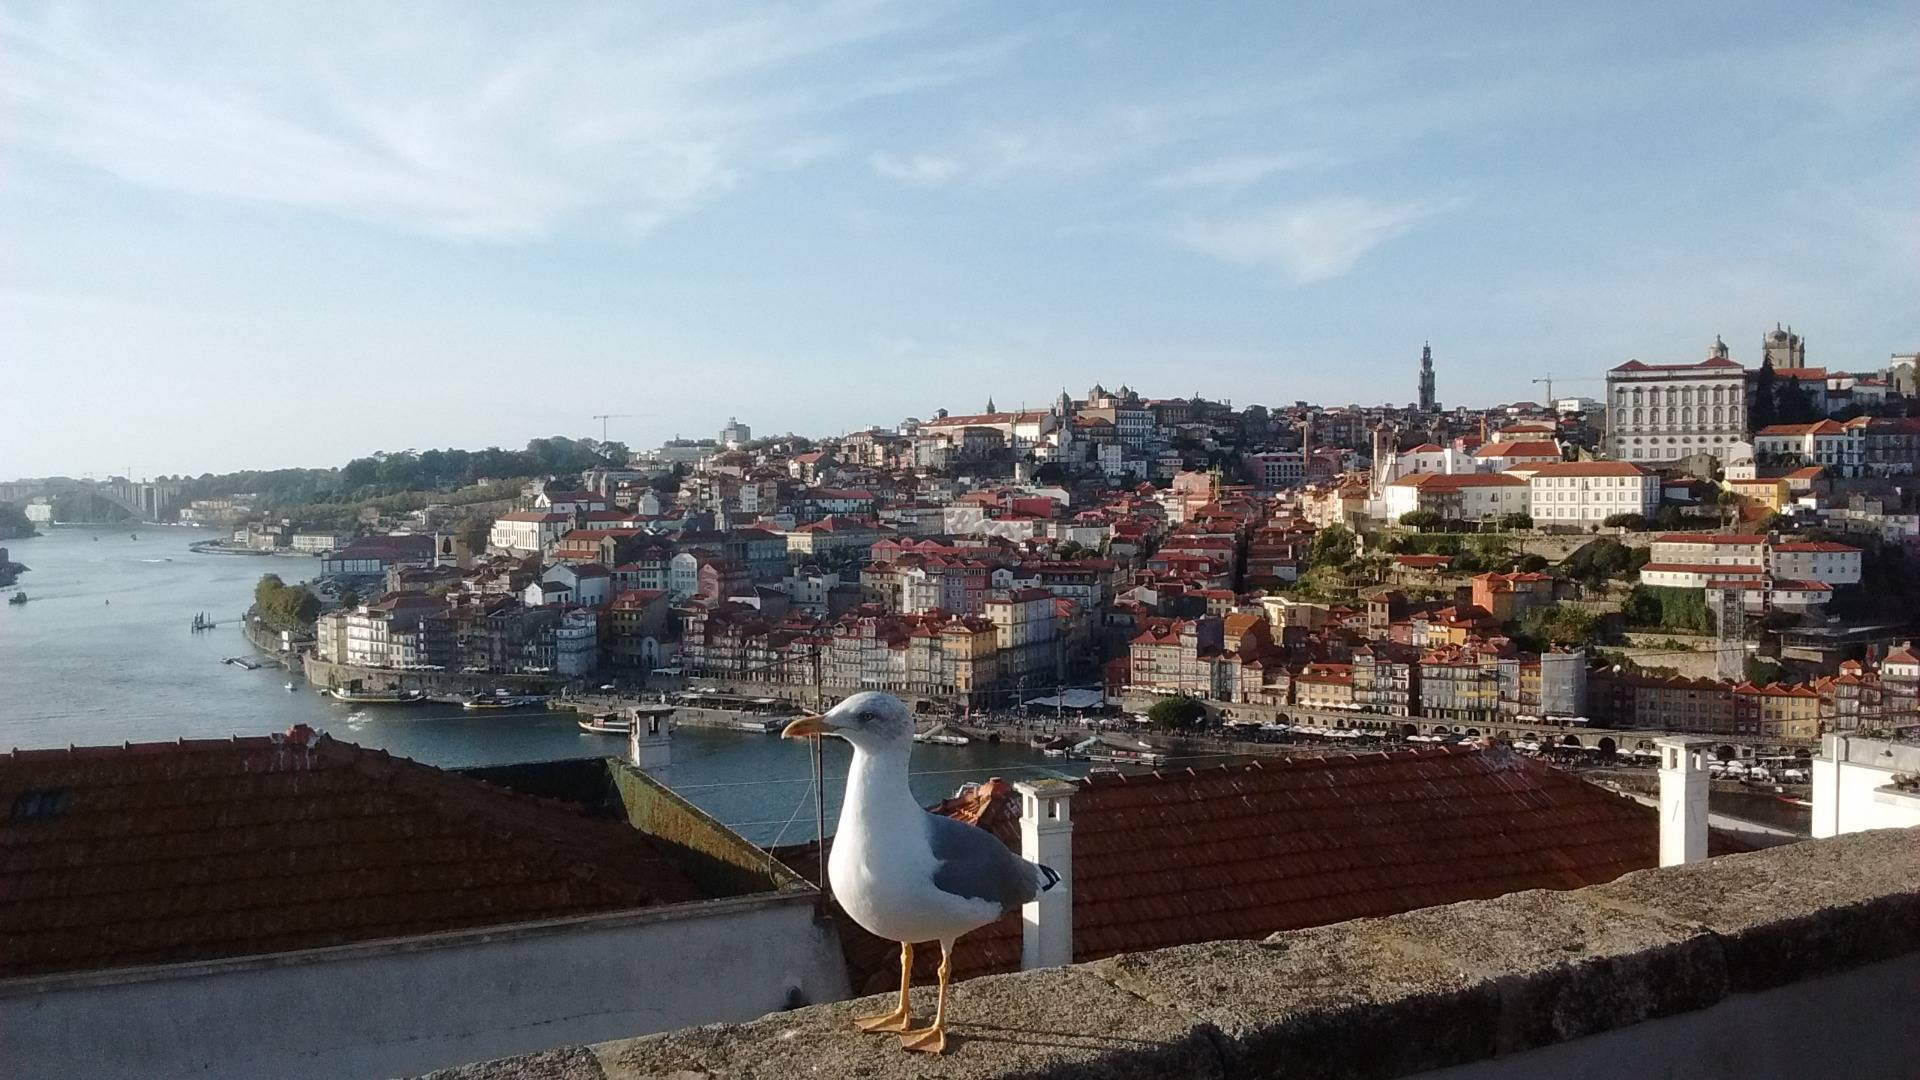 All pictures taken in 2018, in Porto, Portugal.